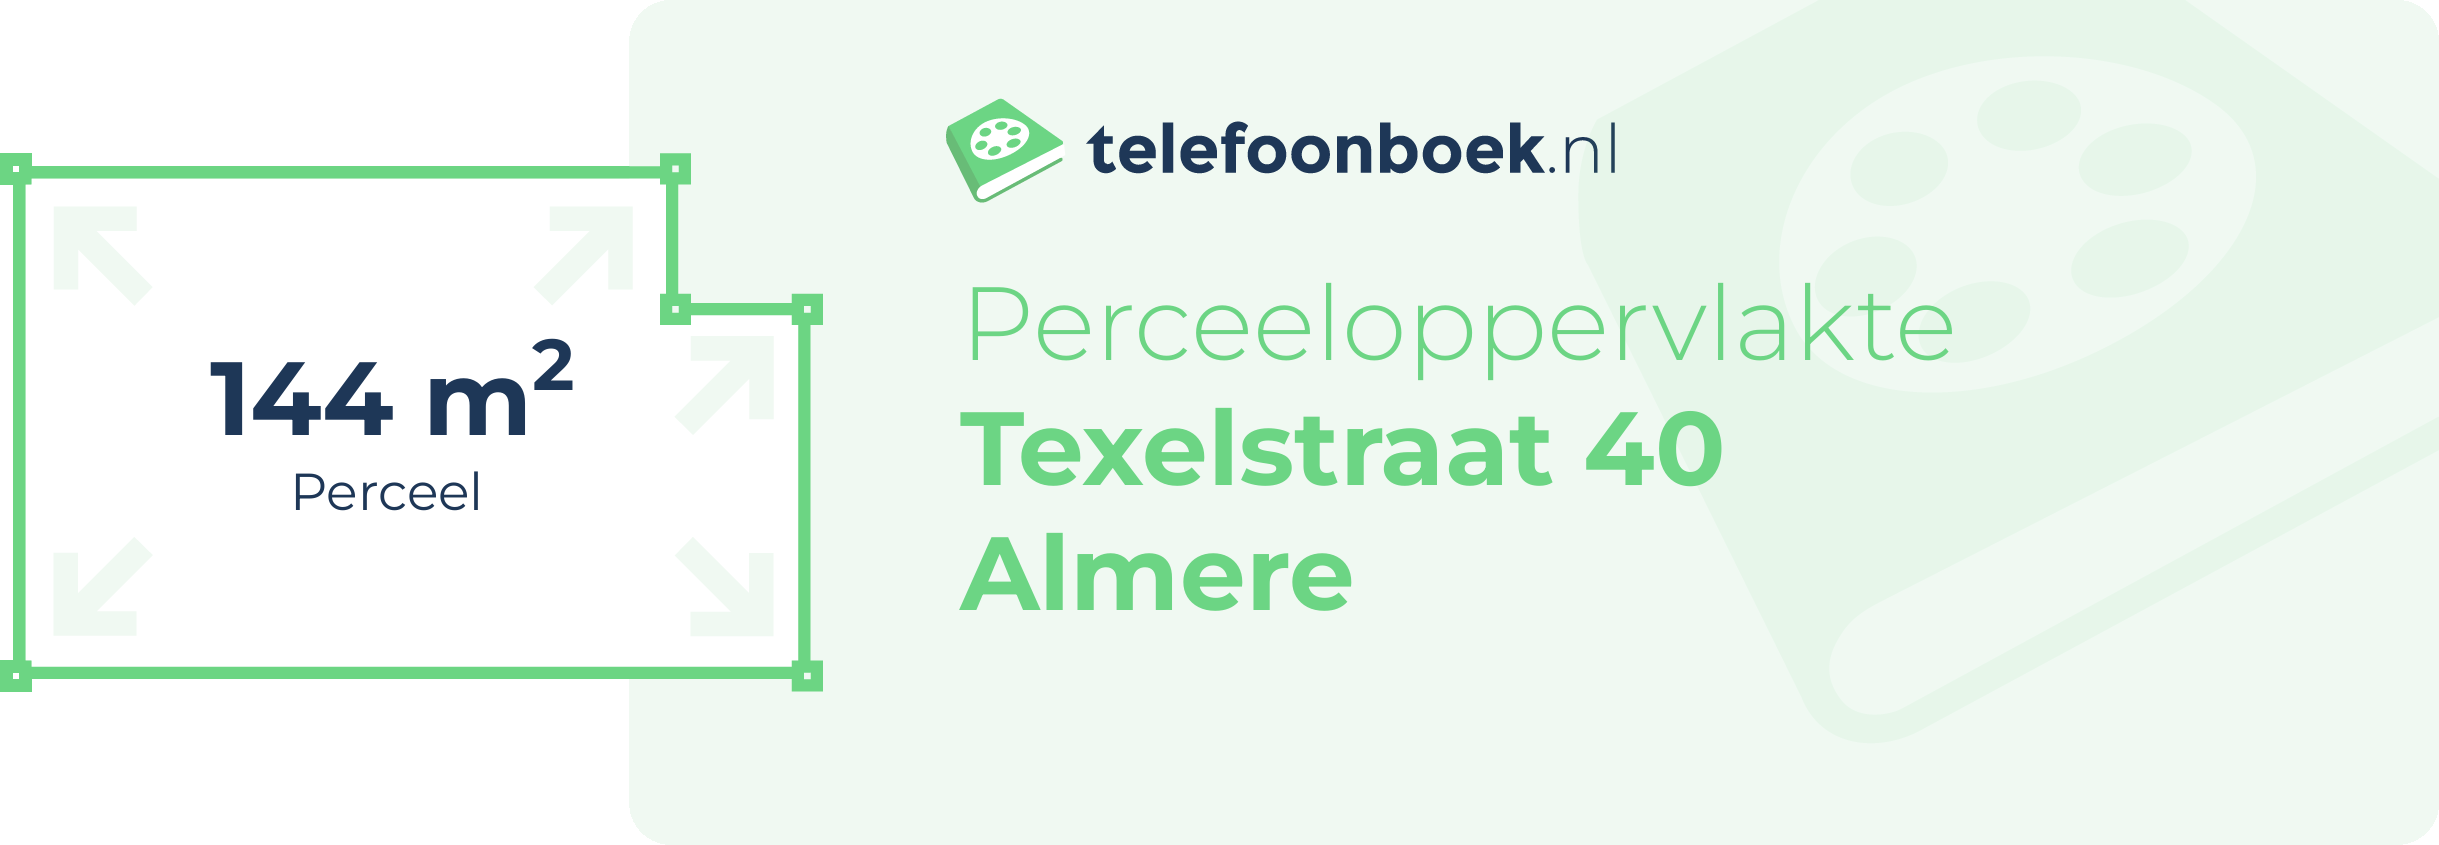 Perceeloppervlakte Texelstraat 40 Almere